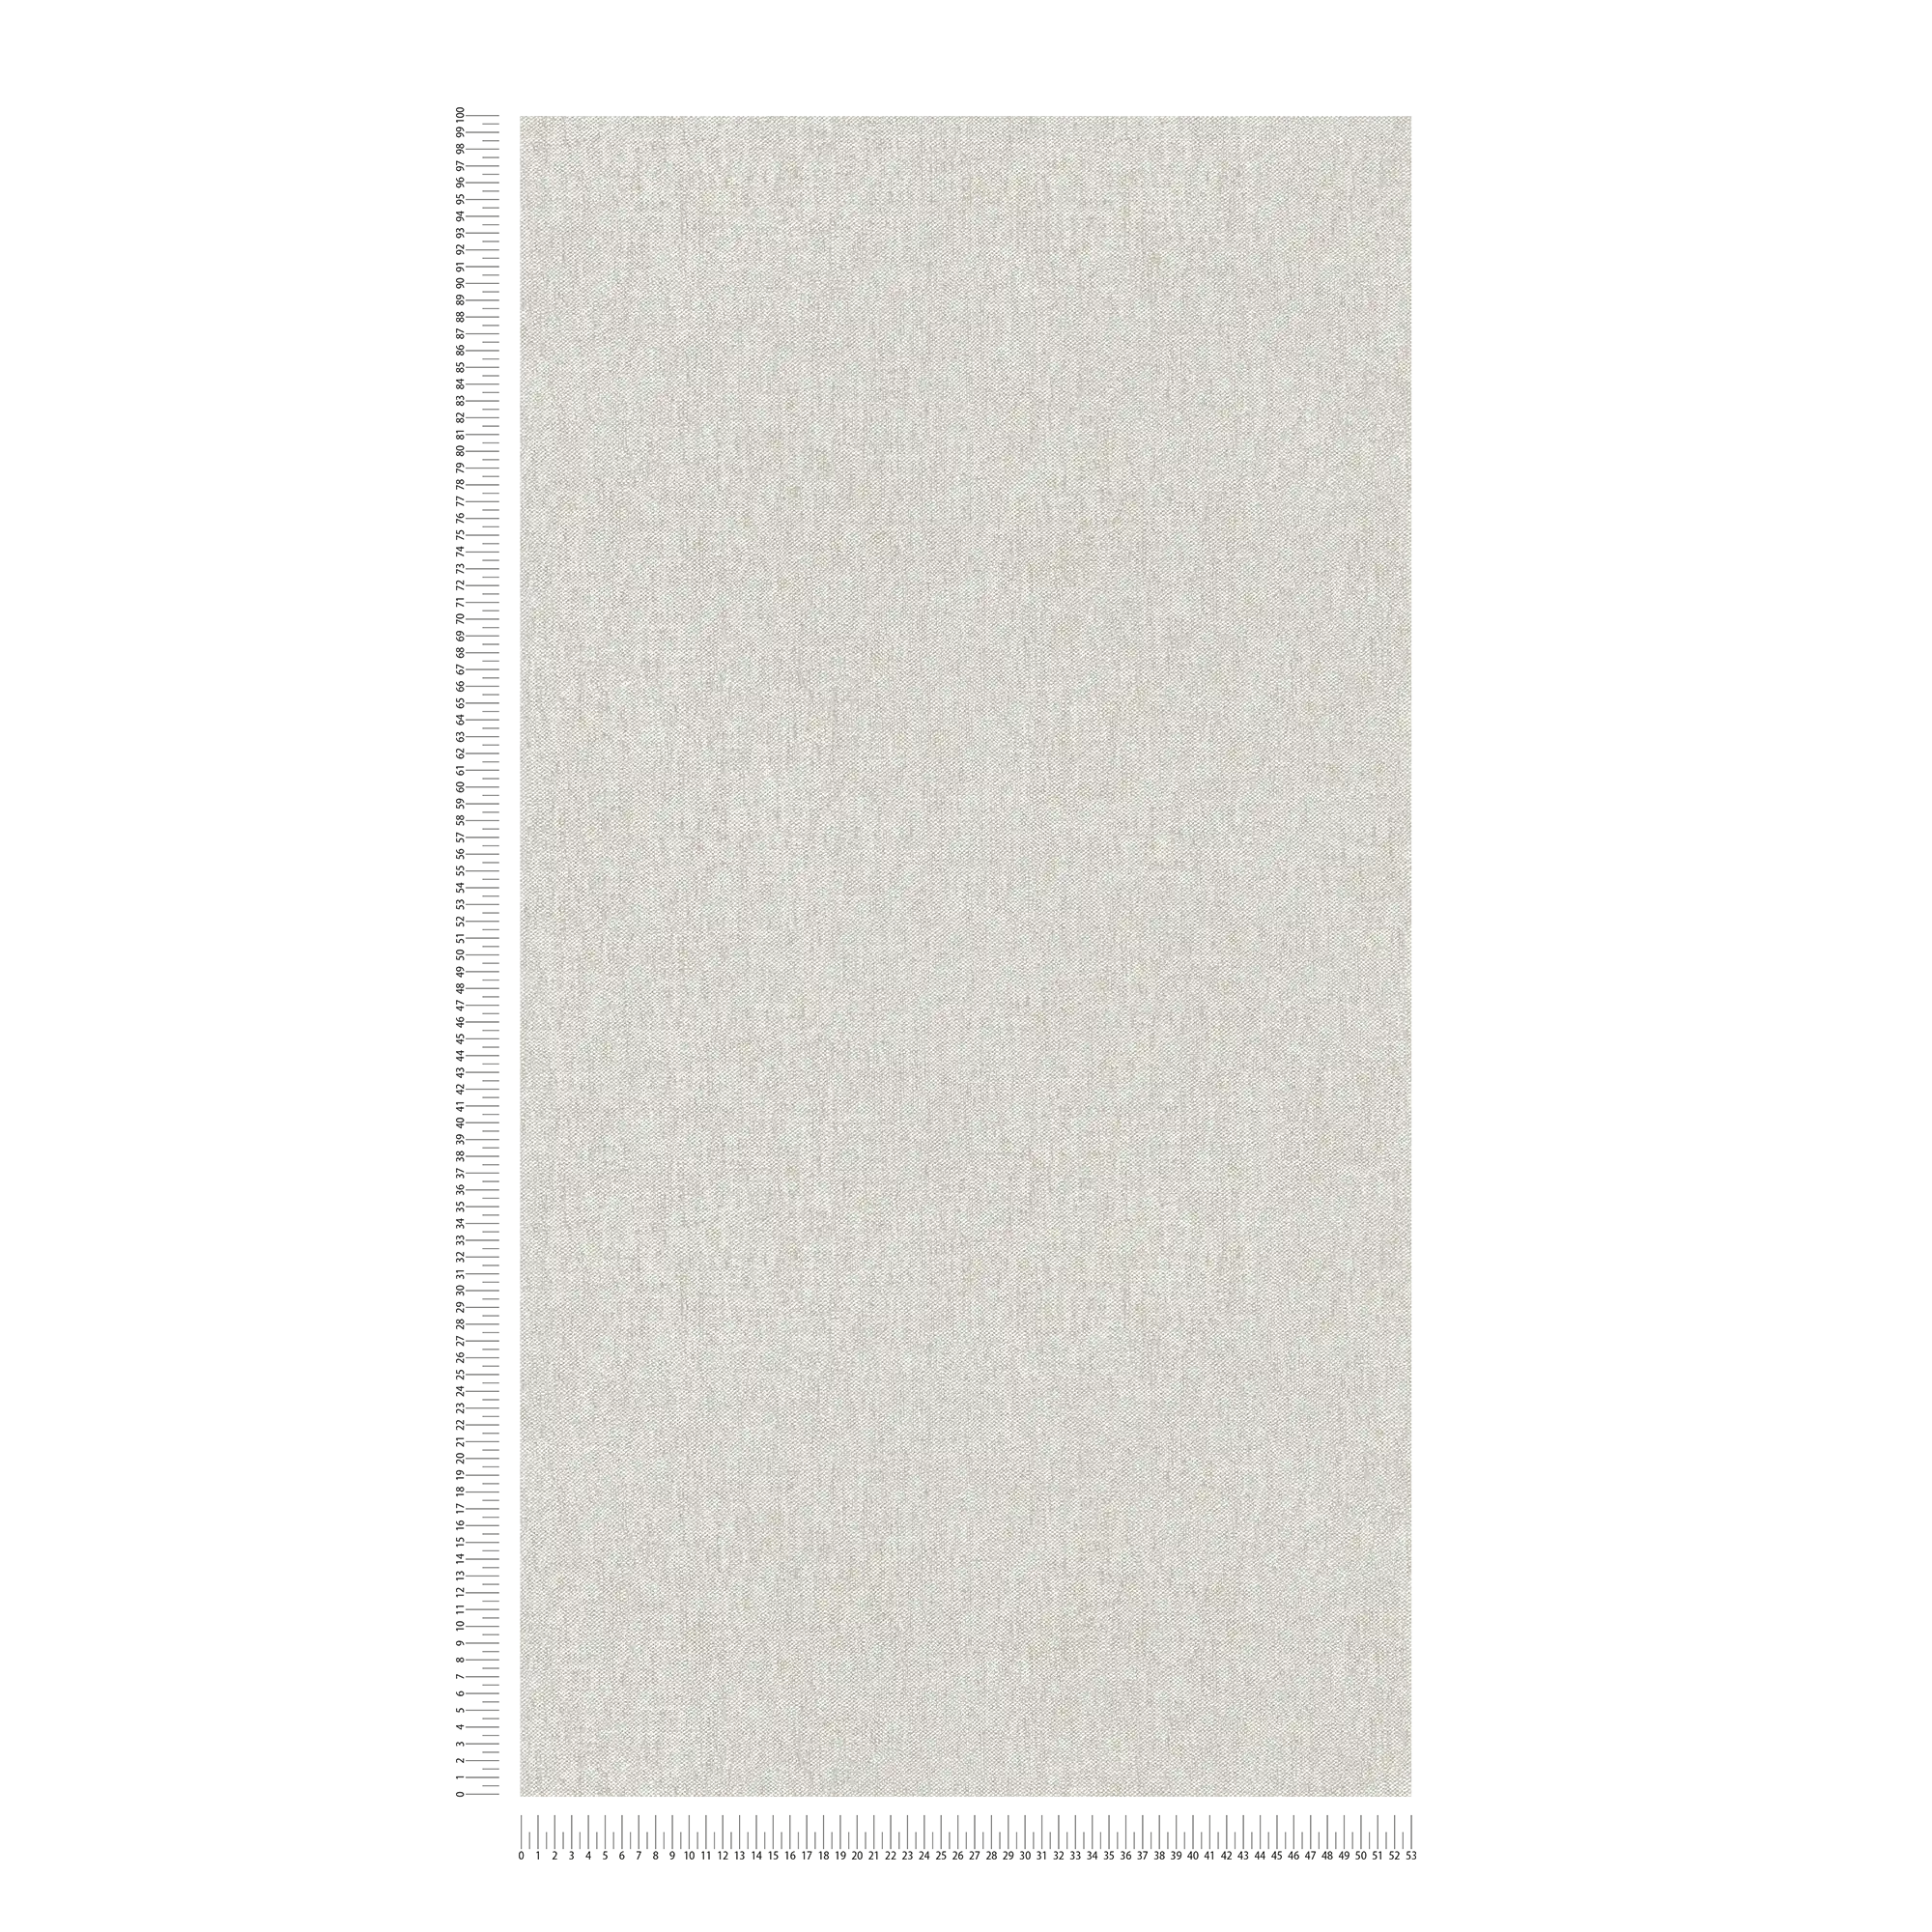             Papel pintado vintage gris claro con motivo textil - gris, beige
        